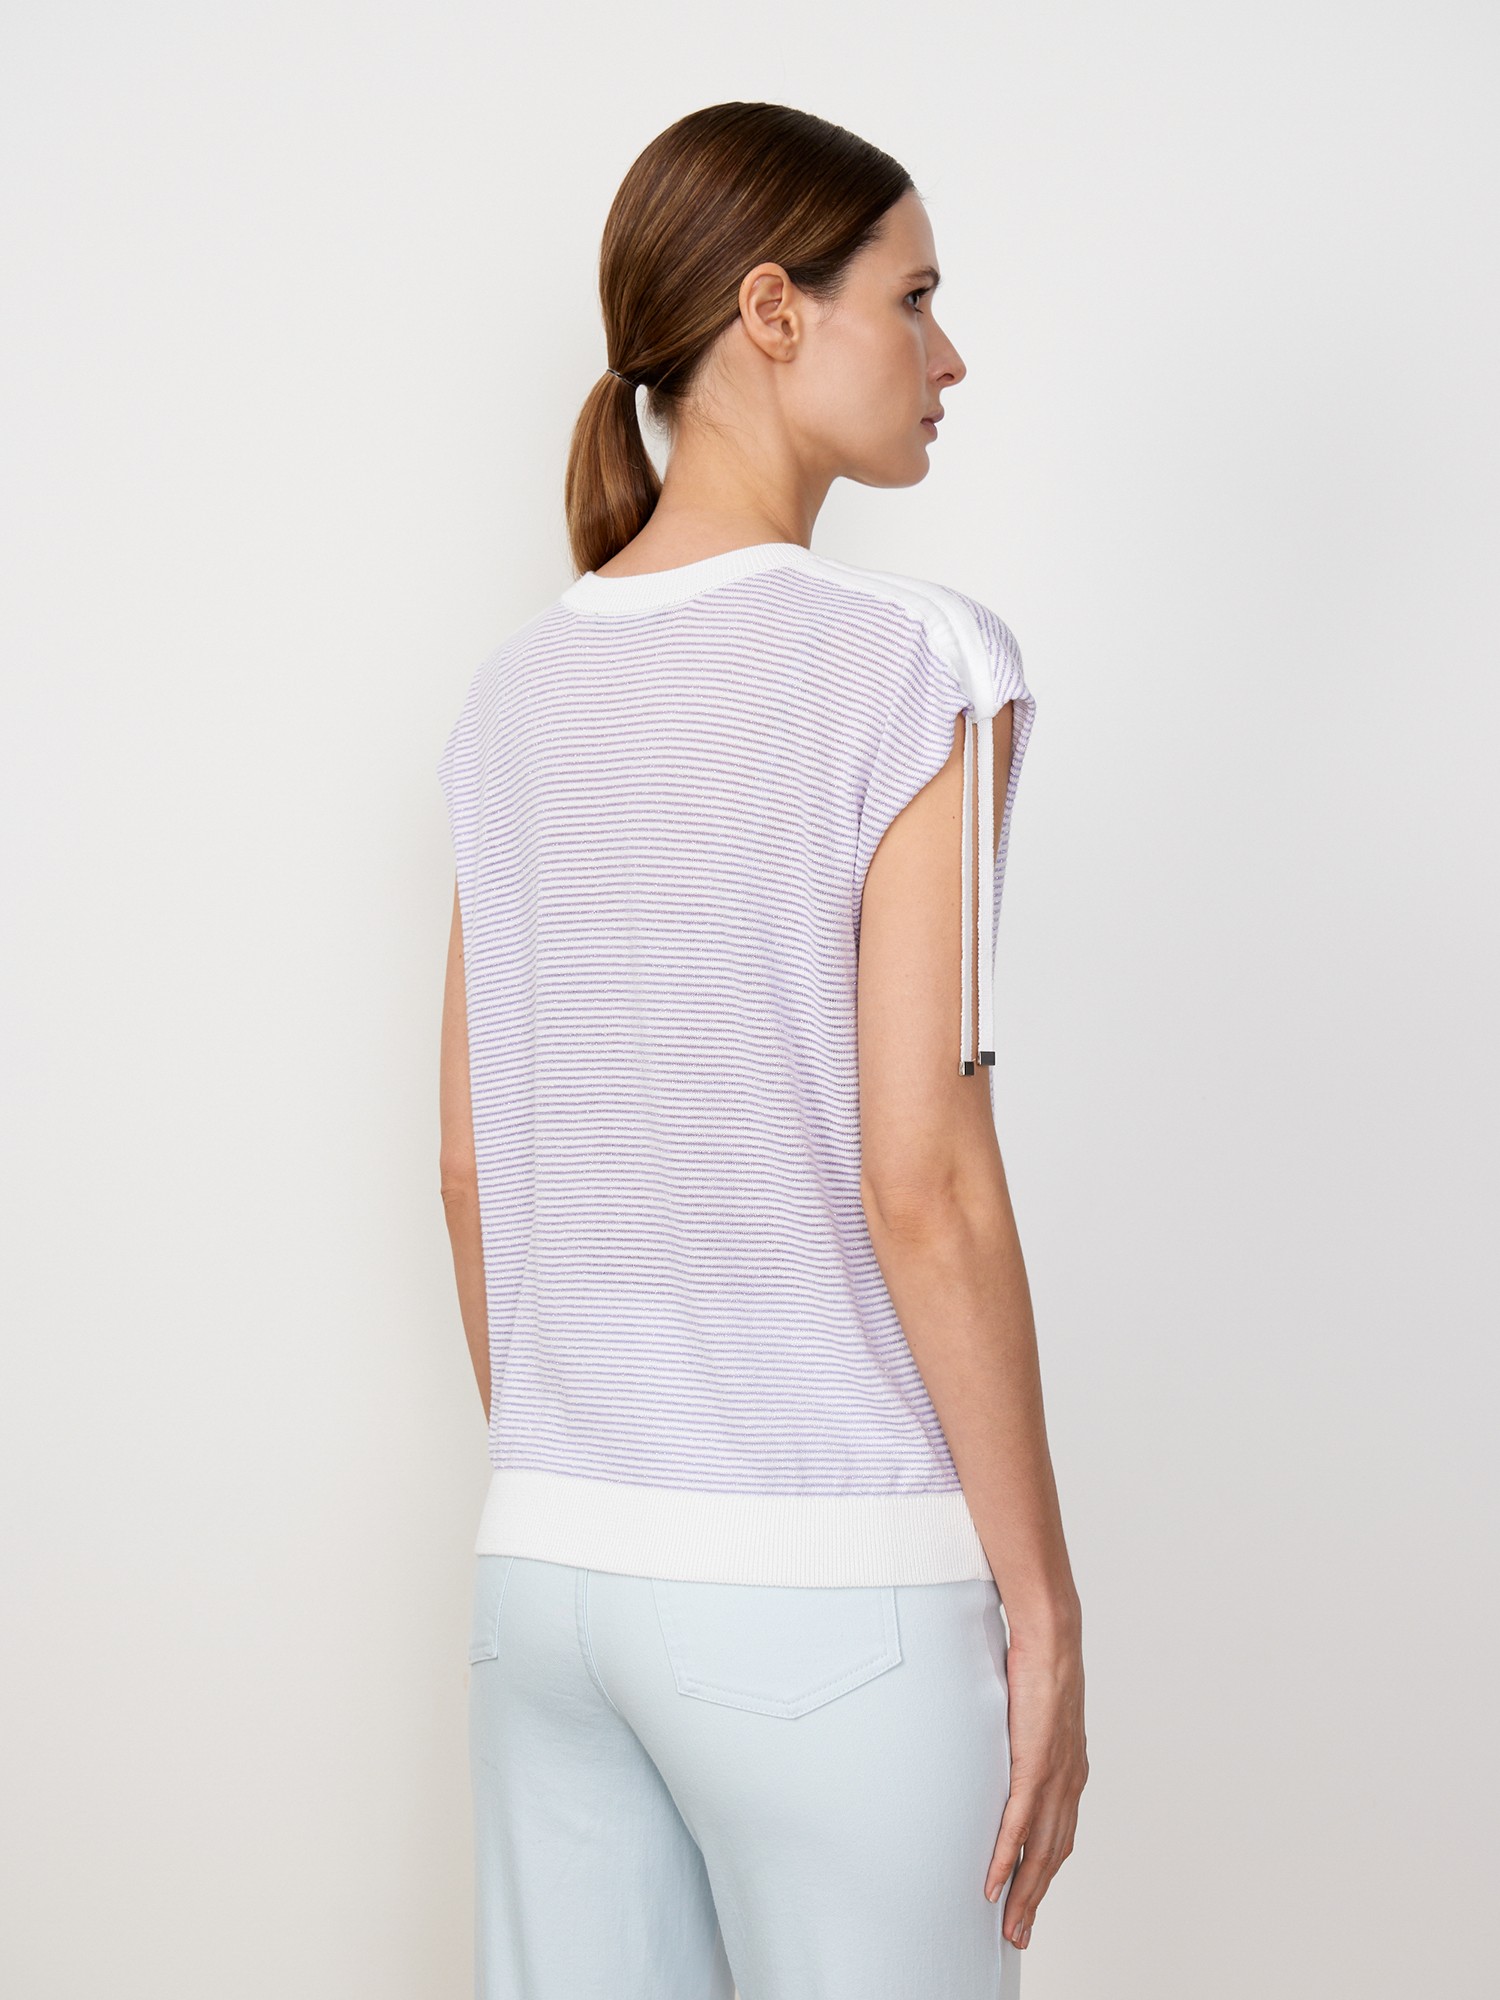 Вязаная блуза с люрексом Elis BL1054V, цвет фиолетовый, размер 46 - фото 4